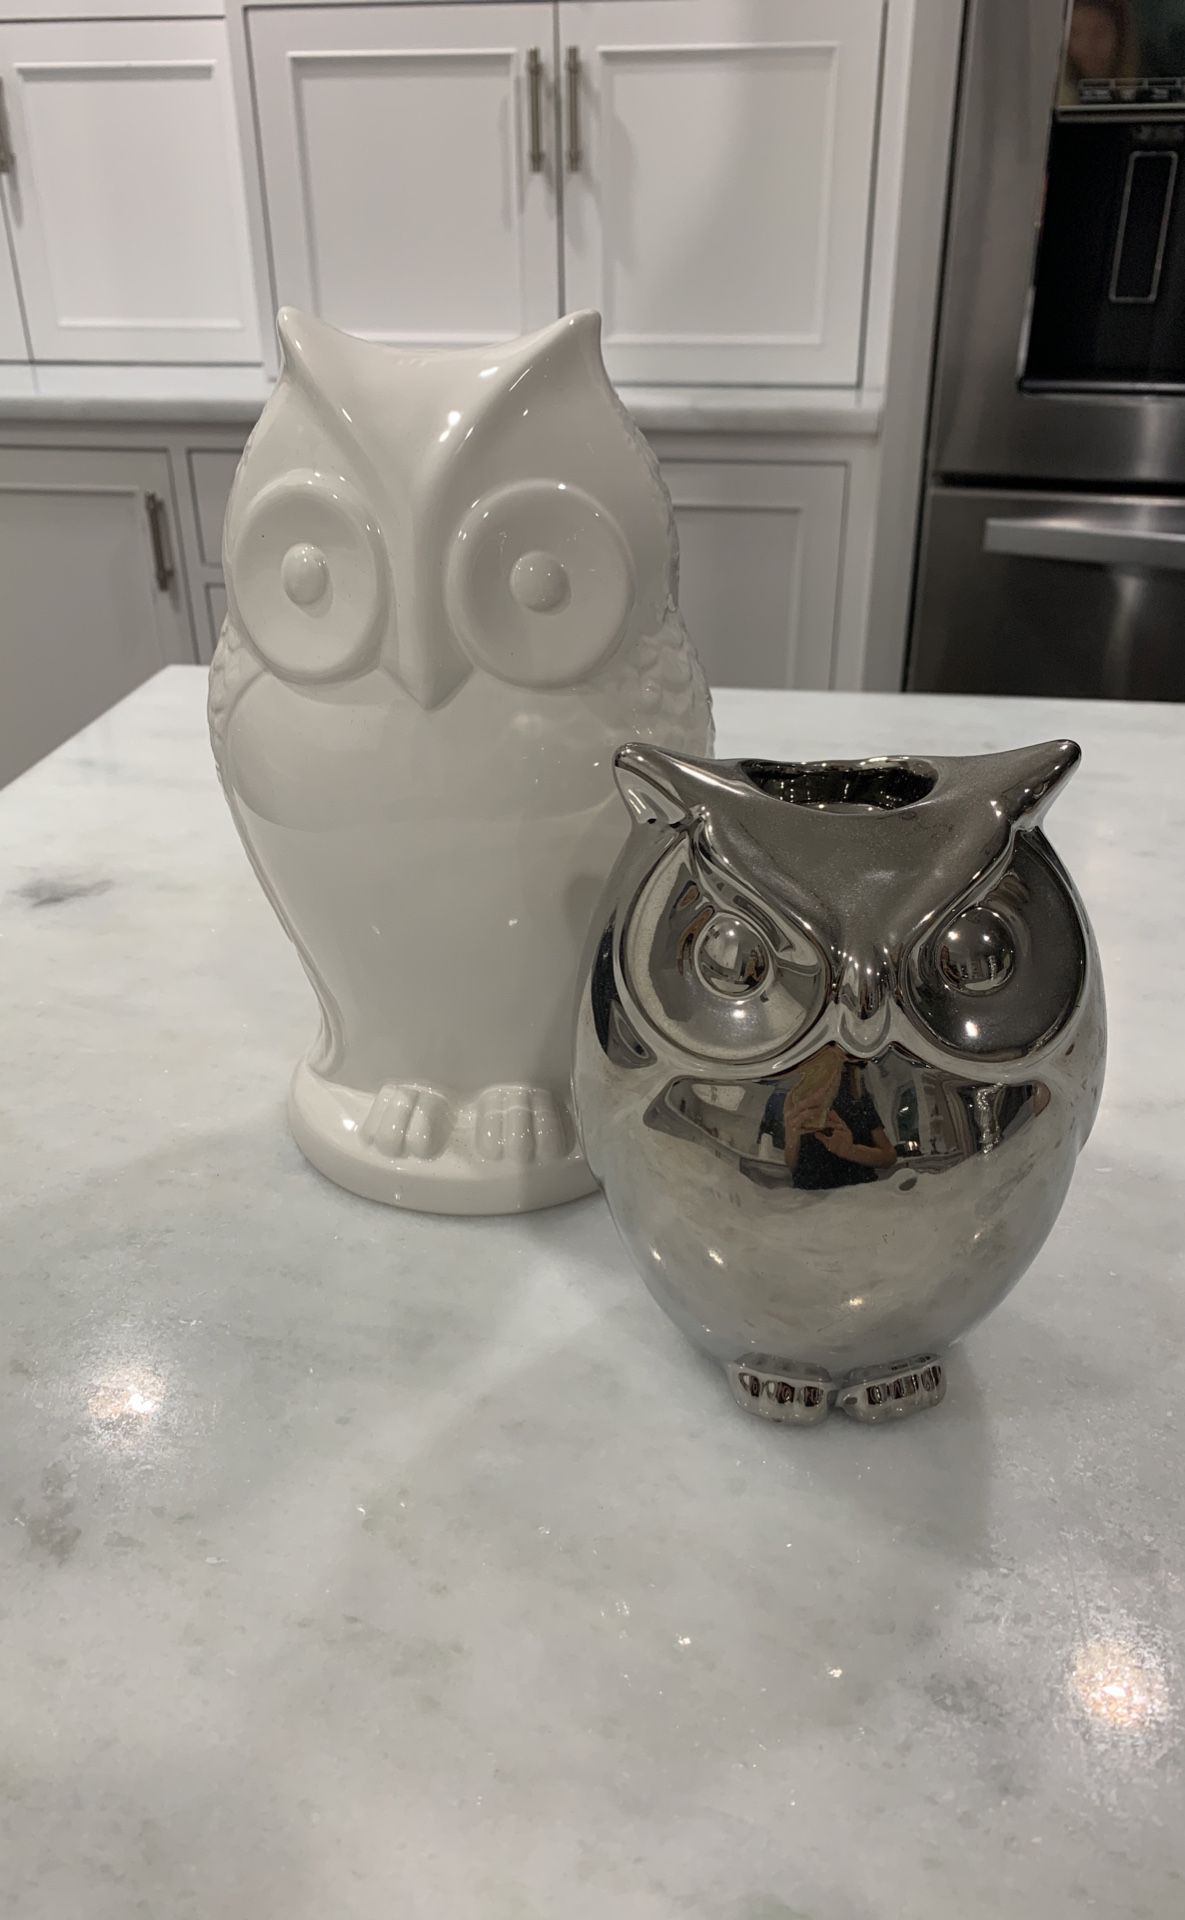 2 decorative owl